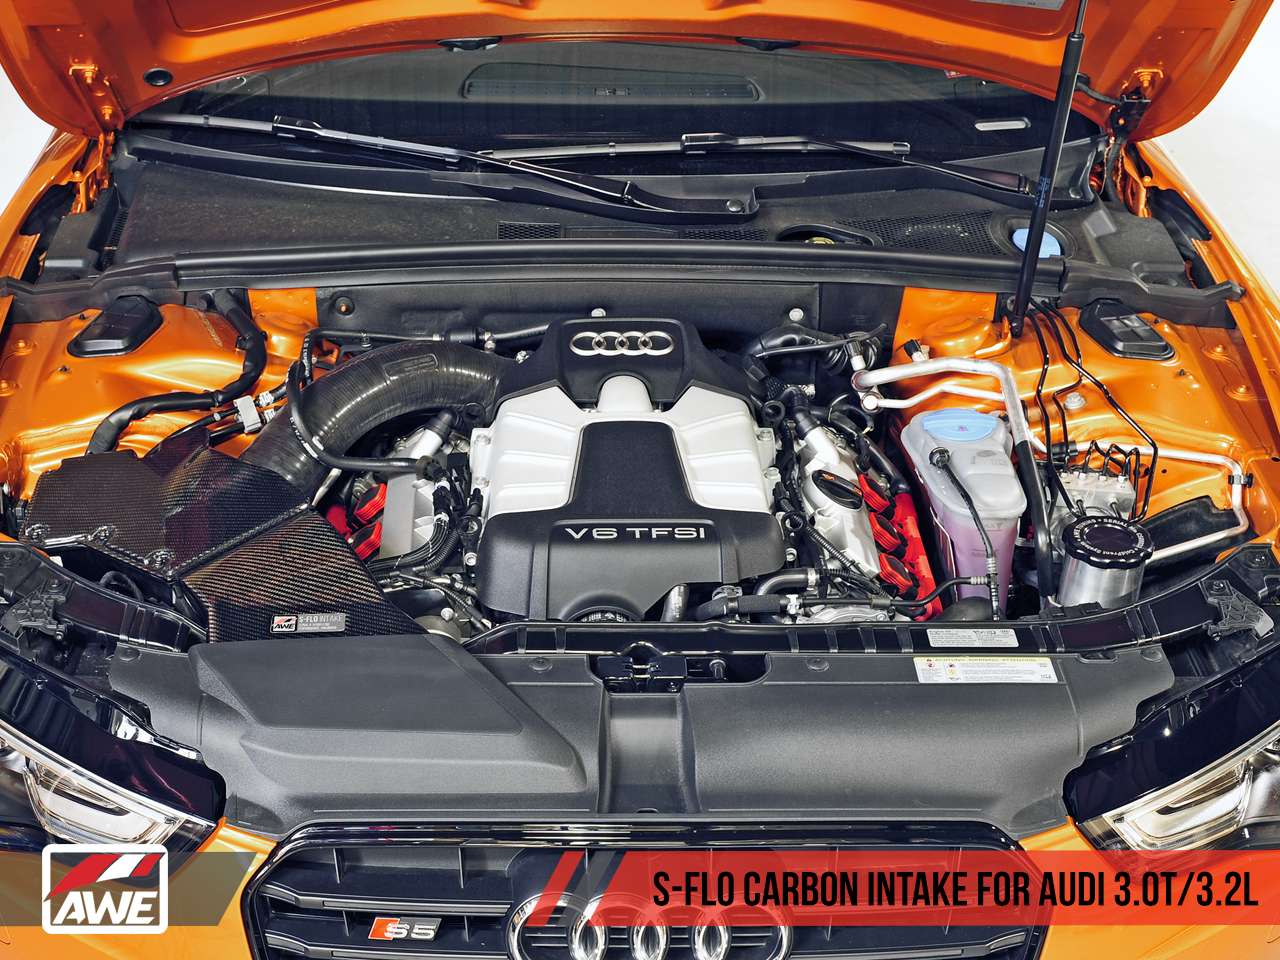 AWE S-FLO Carbon Intake for Audi B8 3.0T / 3.2L